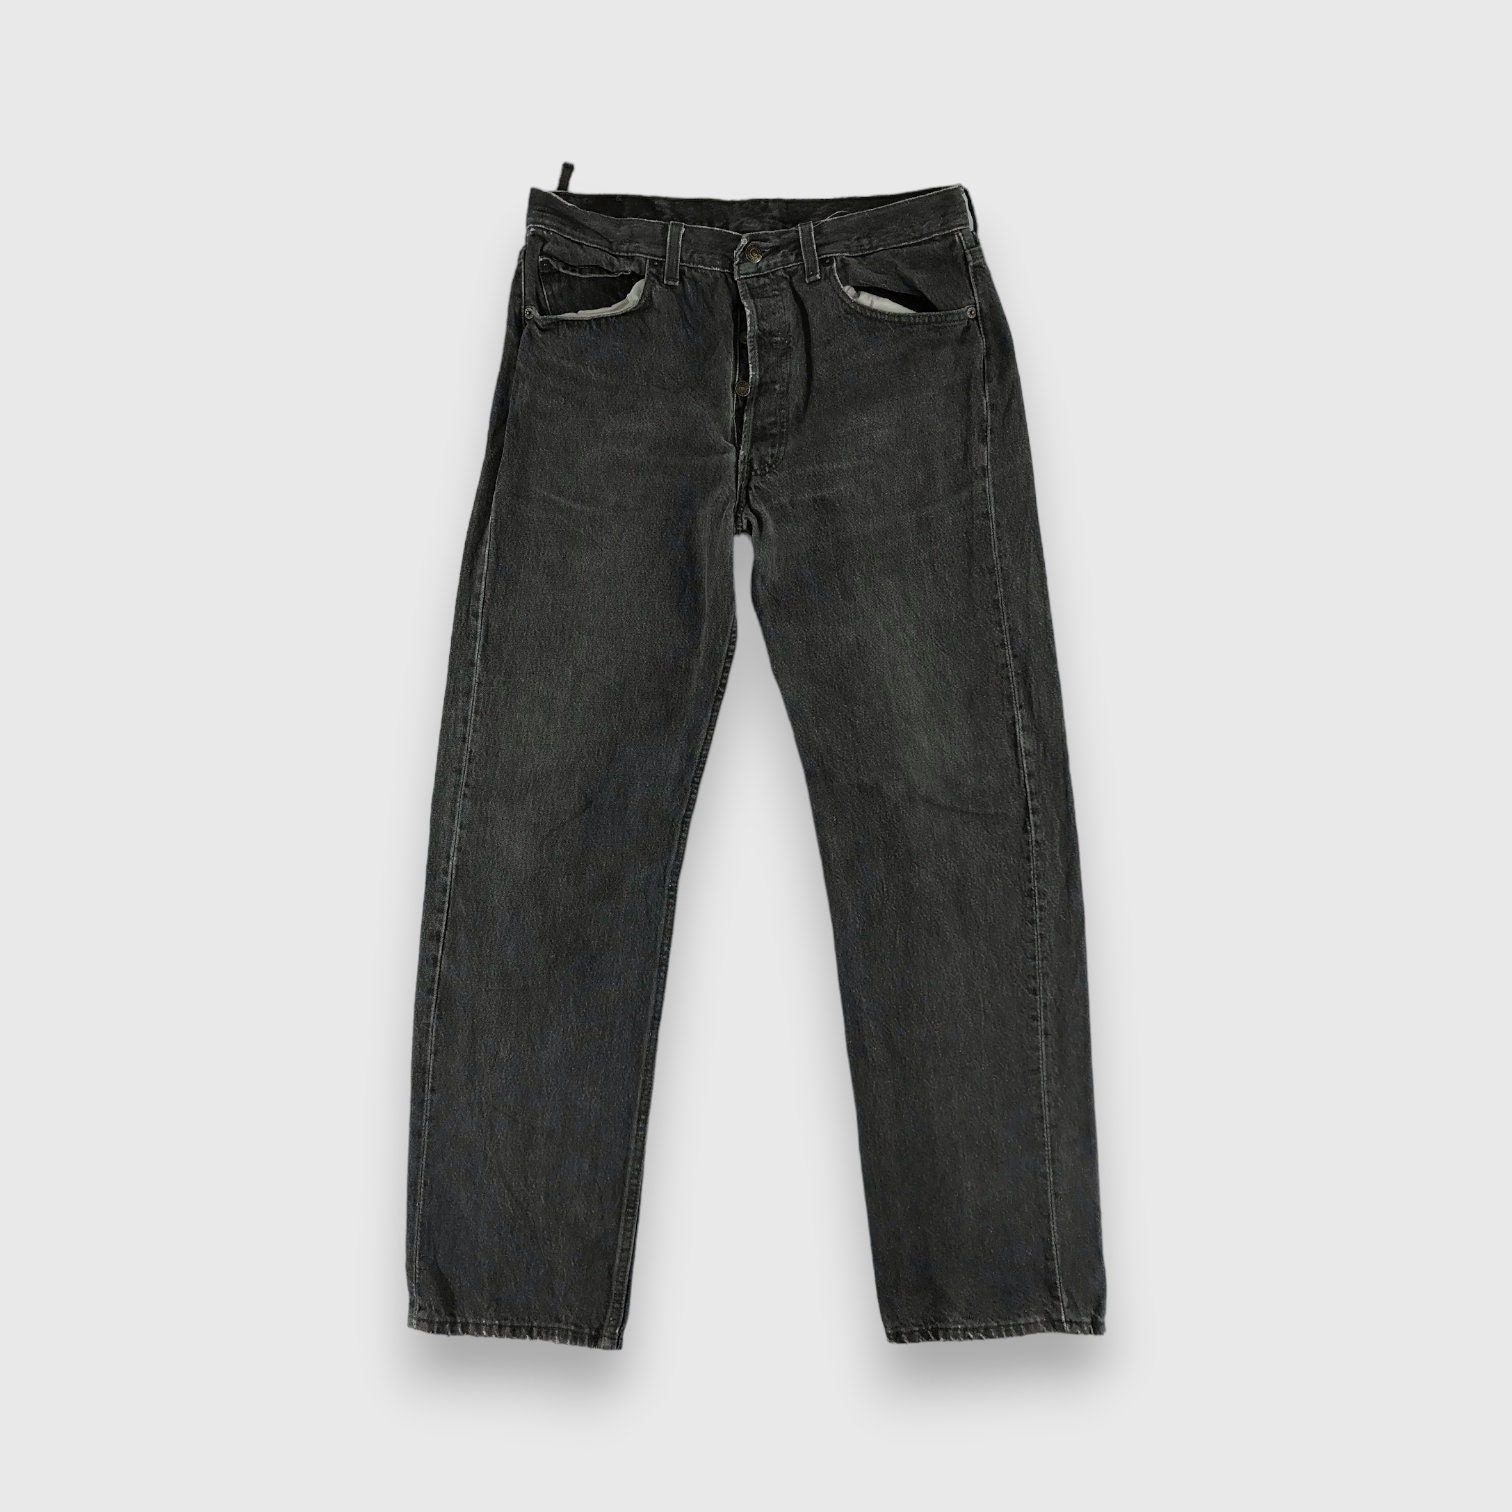 pantalon original levis levi's 501 color negro - Buy Men's vintage clothing  on todocoleccion